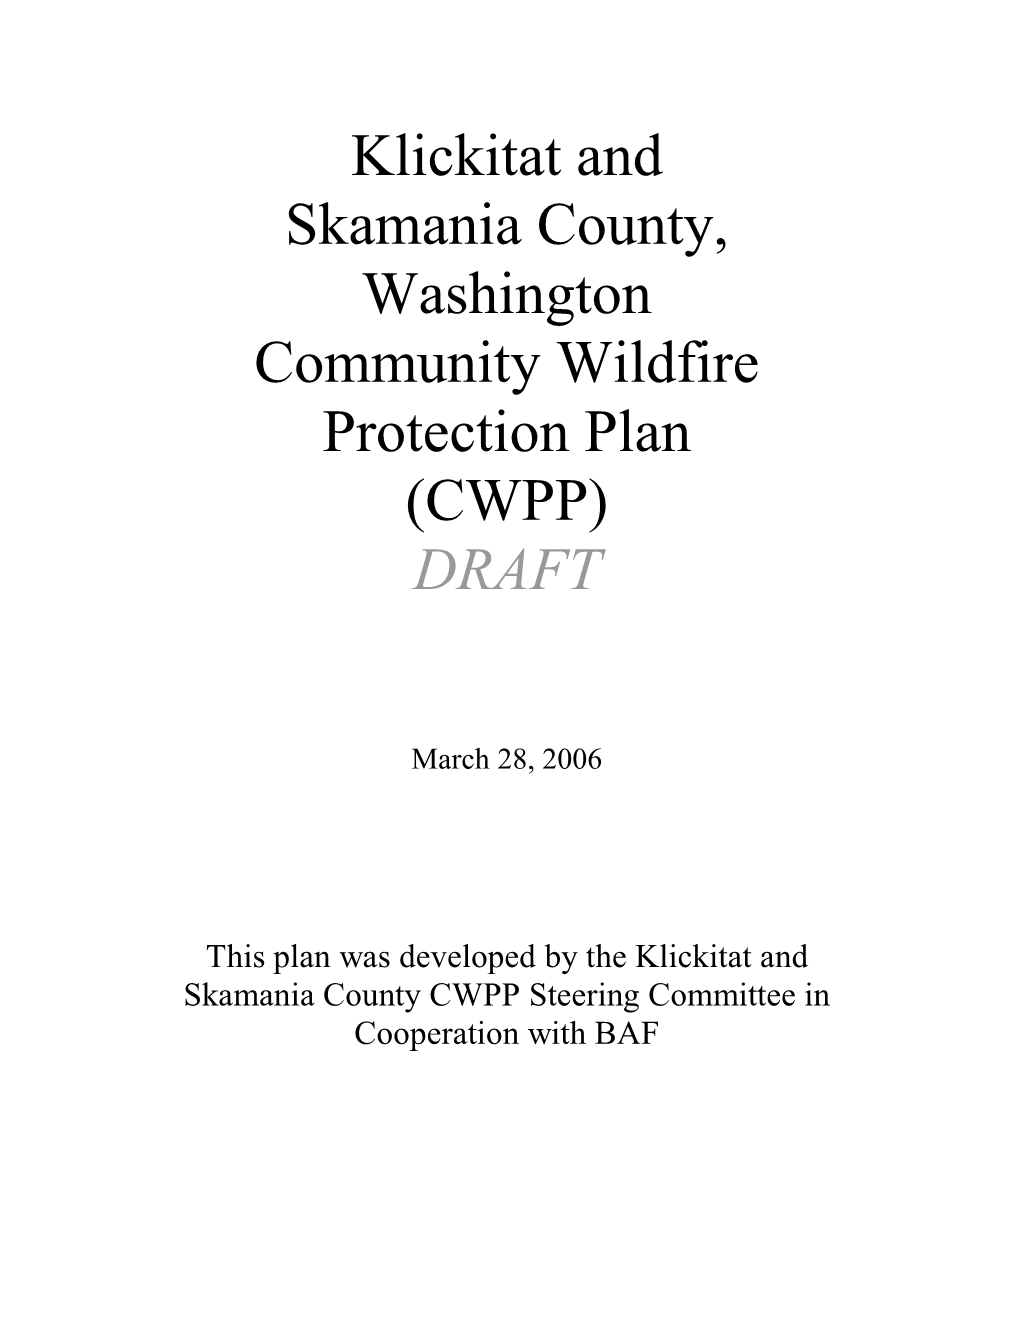 Klickitat and Skamania County, Washington Community Wildfire Protection Plan (CWPP) DRAFT